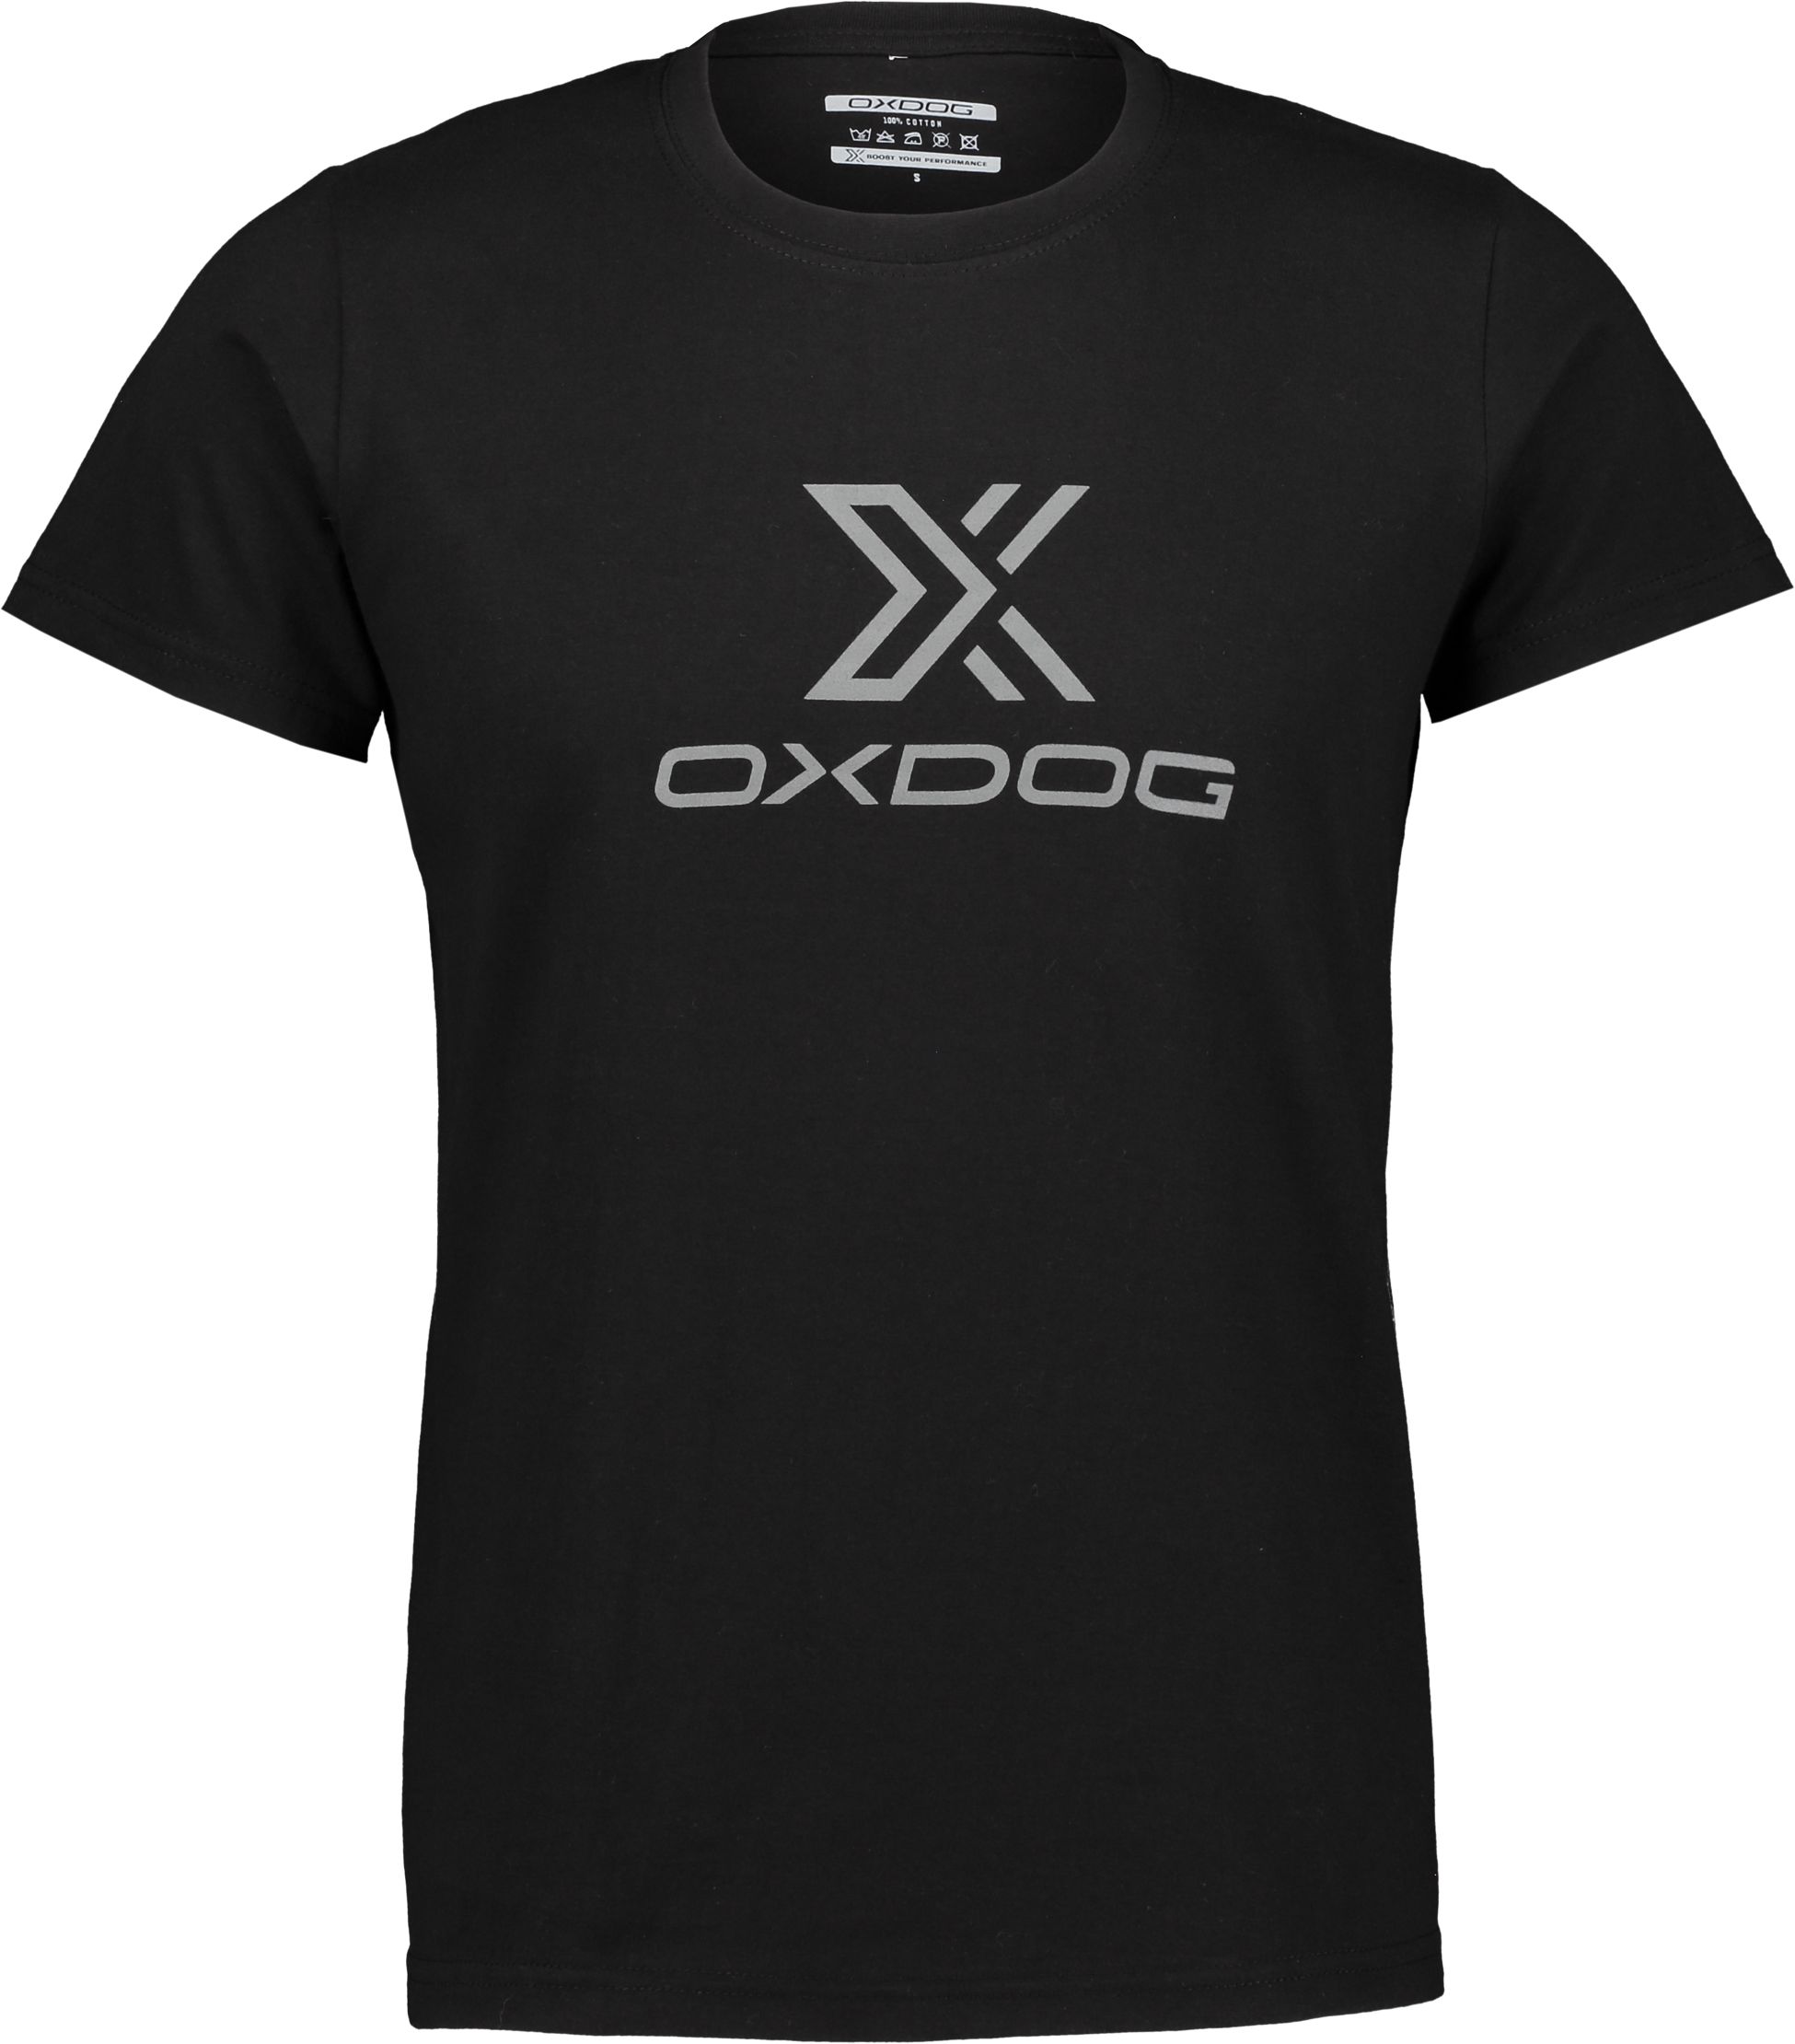 OXDOG, OHIO T-SHIRT